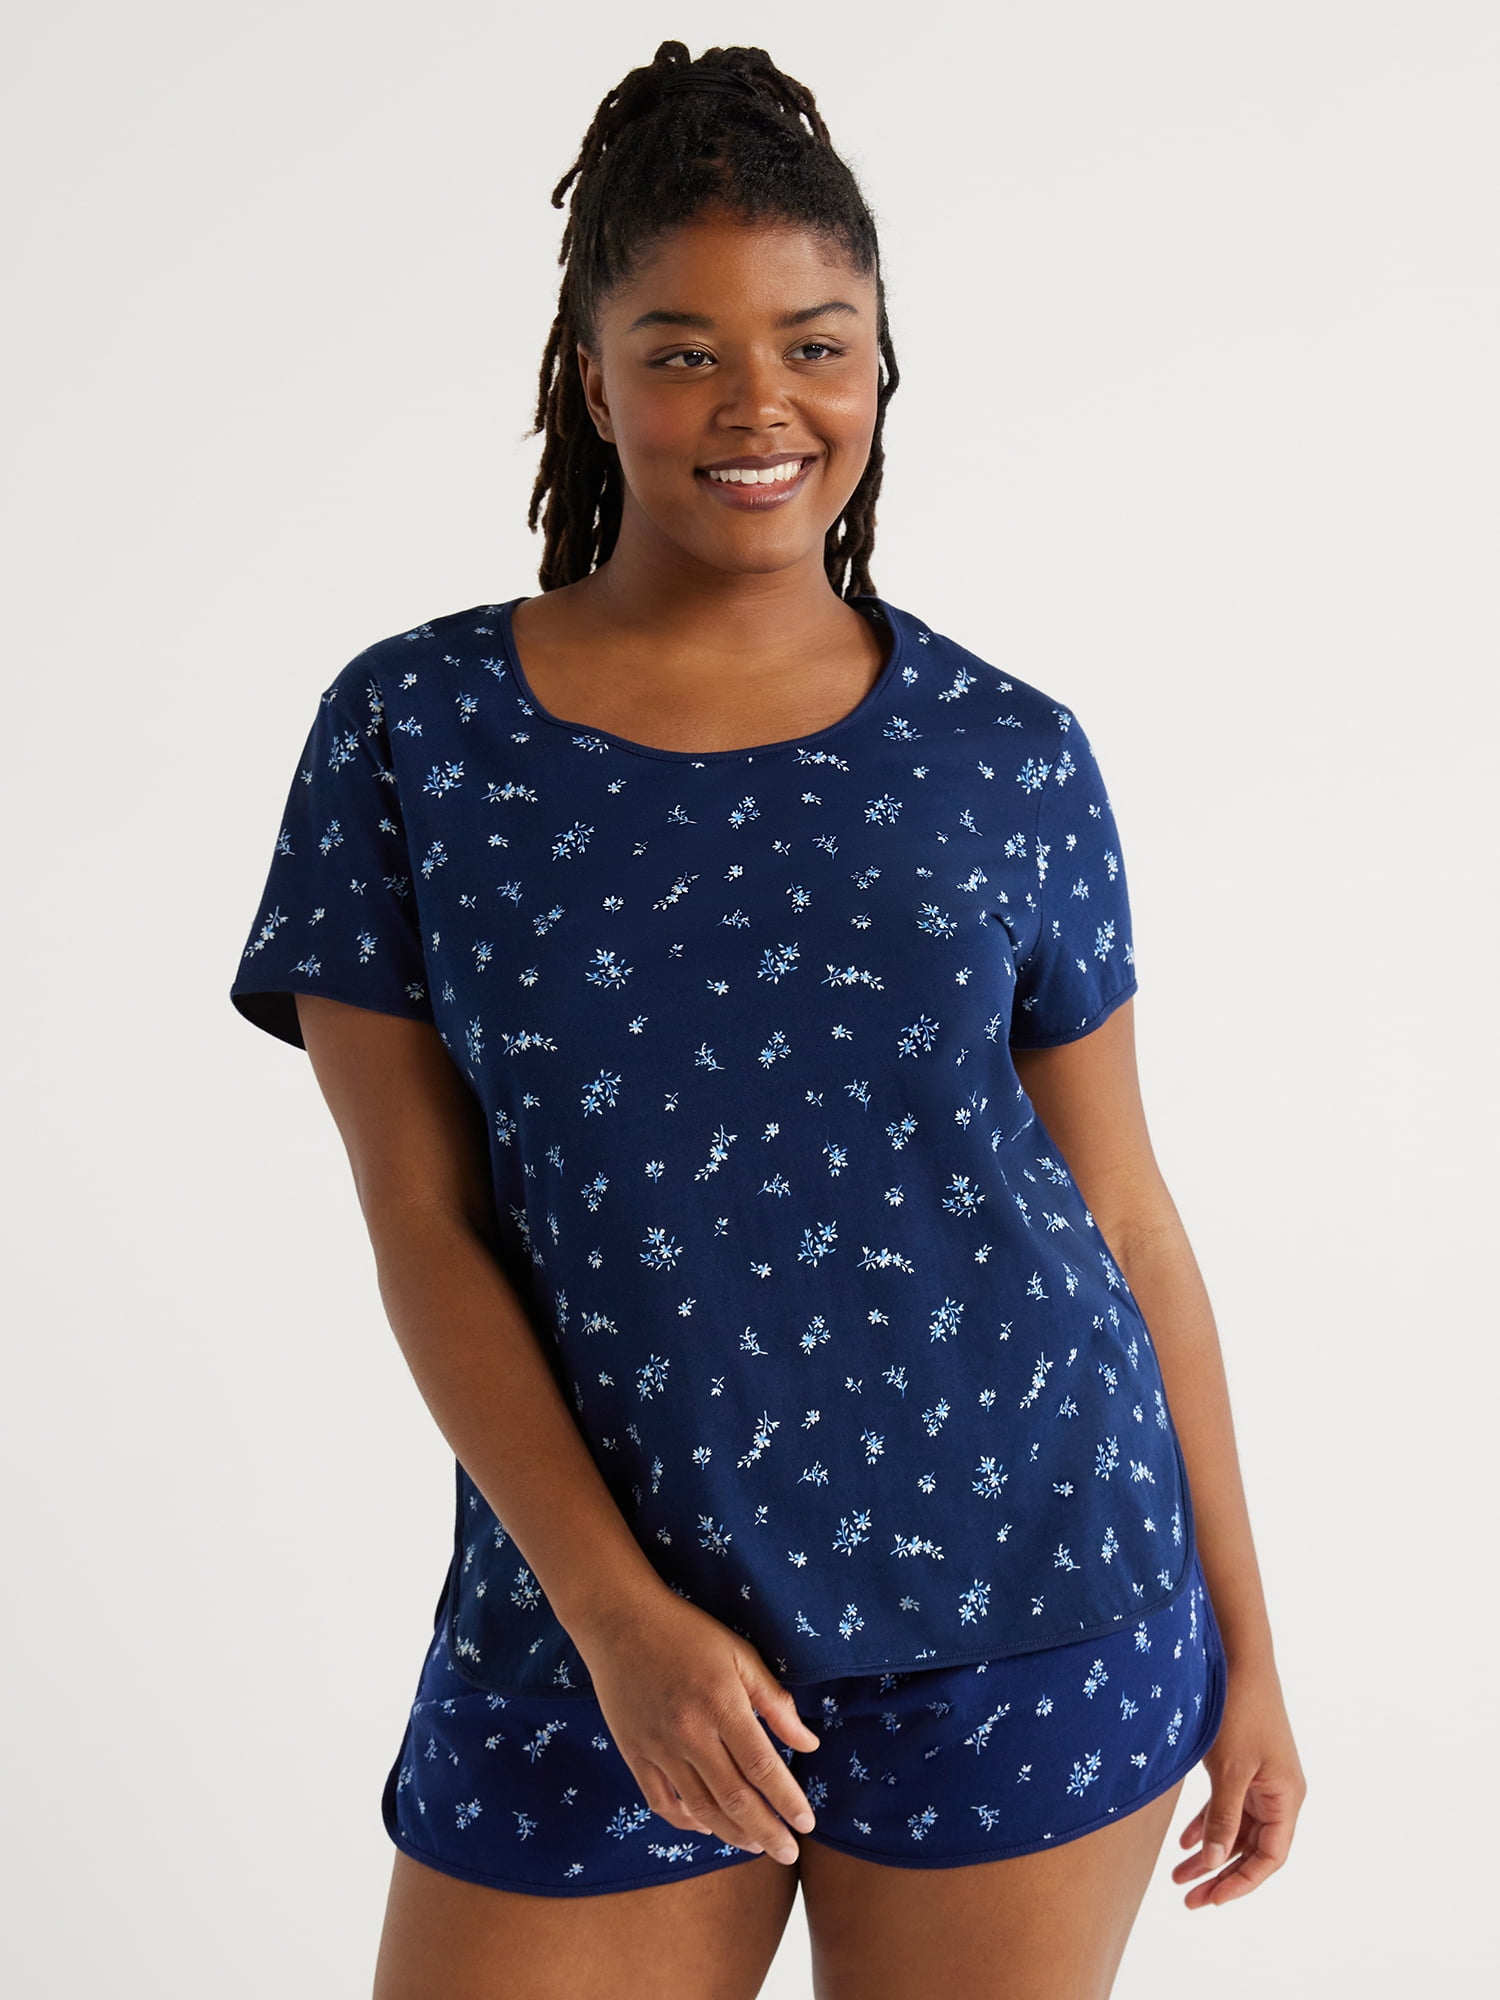 Joyspun Women's Cotton Blend T-Shirt and Shorts Pajama Set, 2